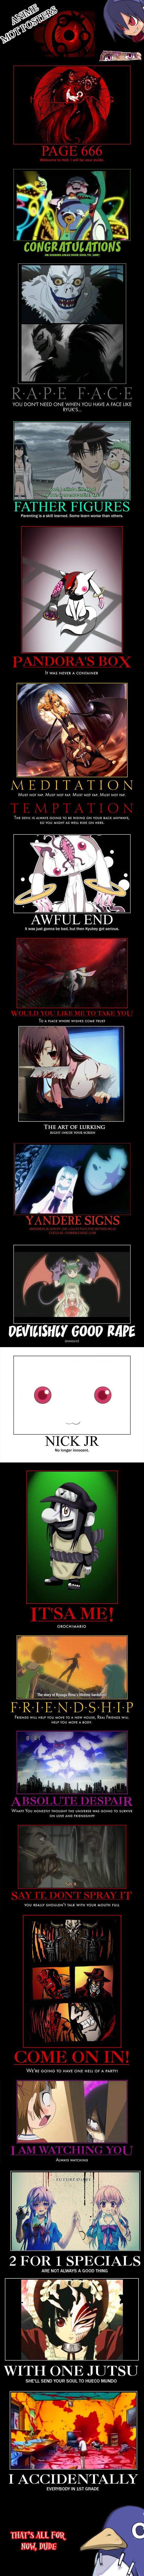 Anime Mot Posters 666